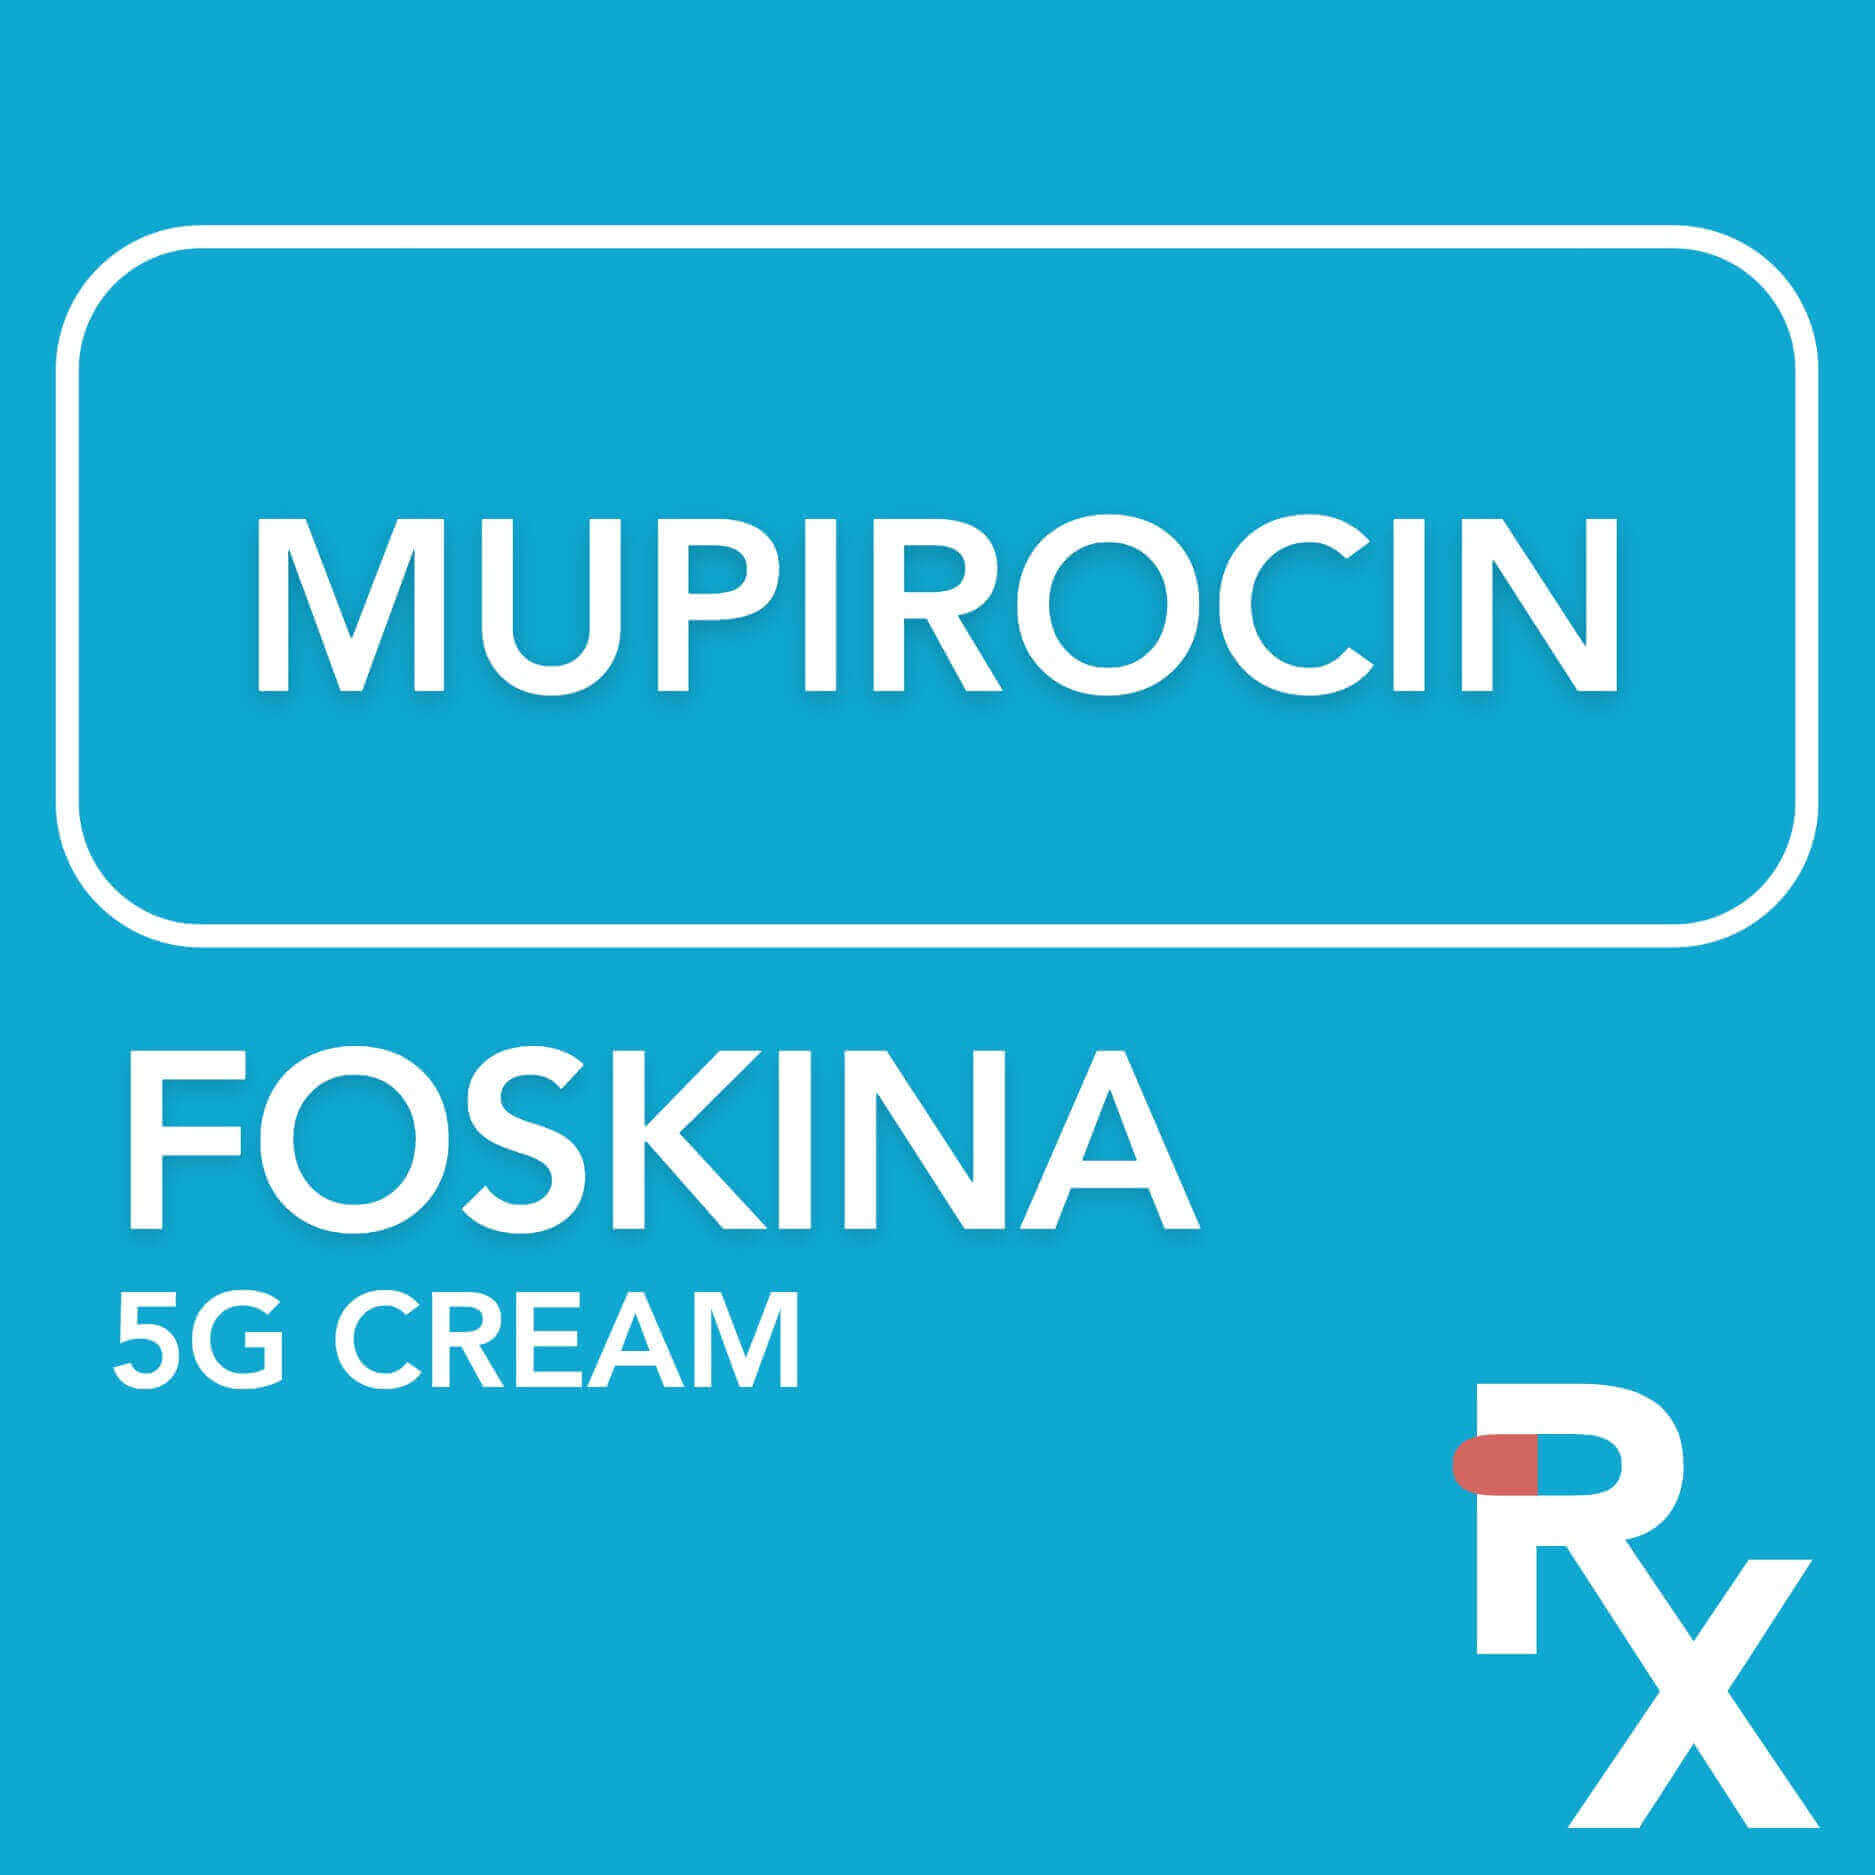  buy foskina 5g cream online at best price in philippines